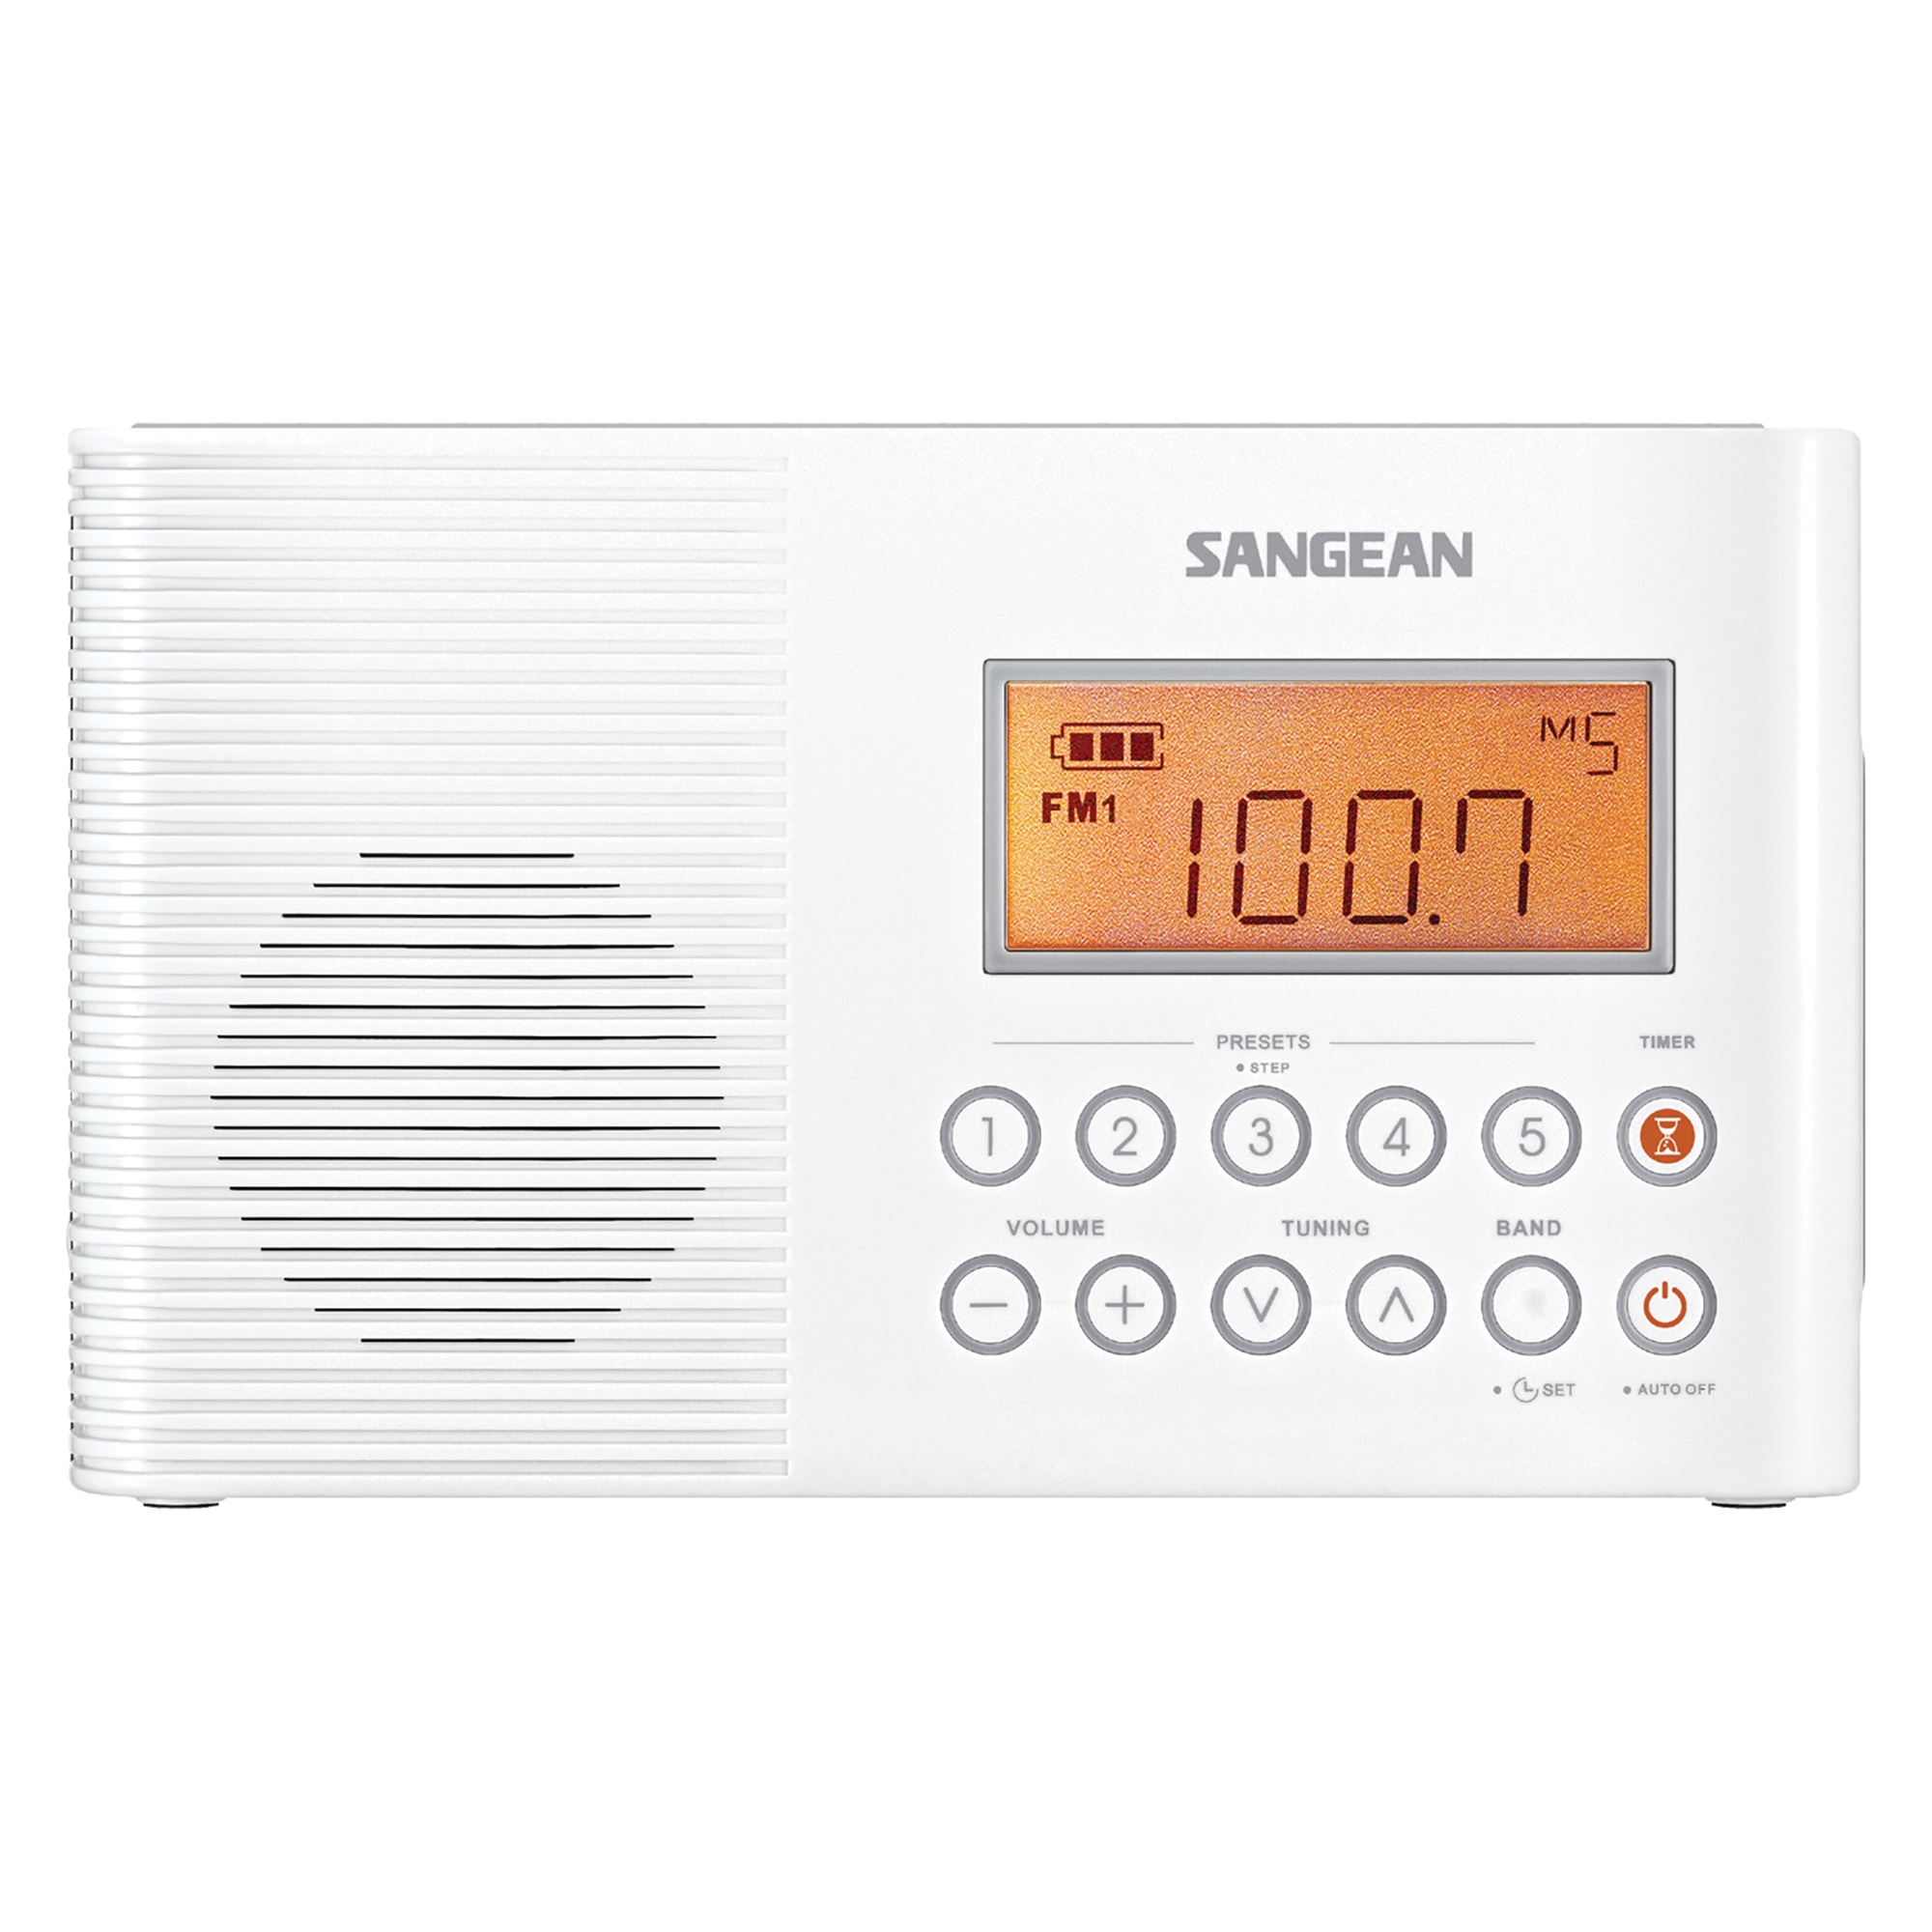 Sangean Portable AM/FM Radio, White, H201 - image 4 of 5